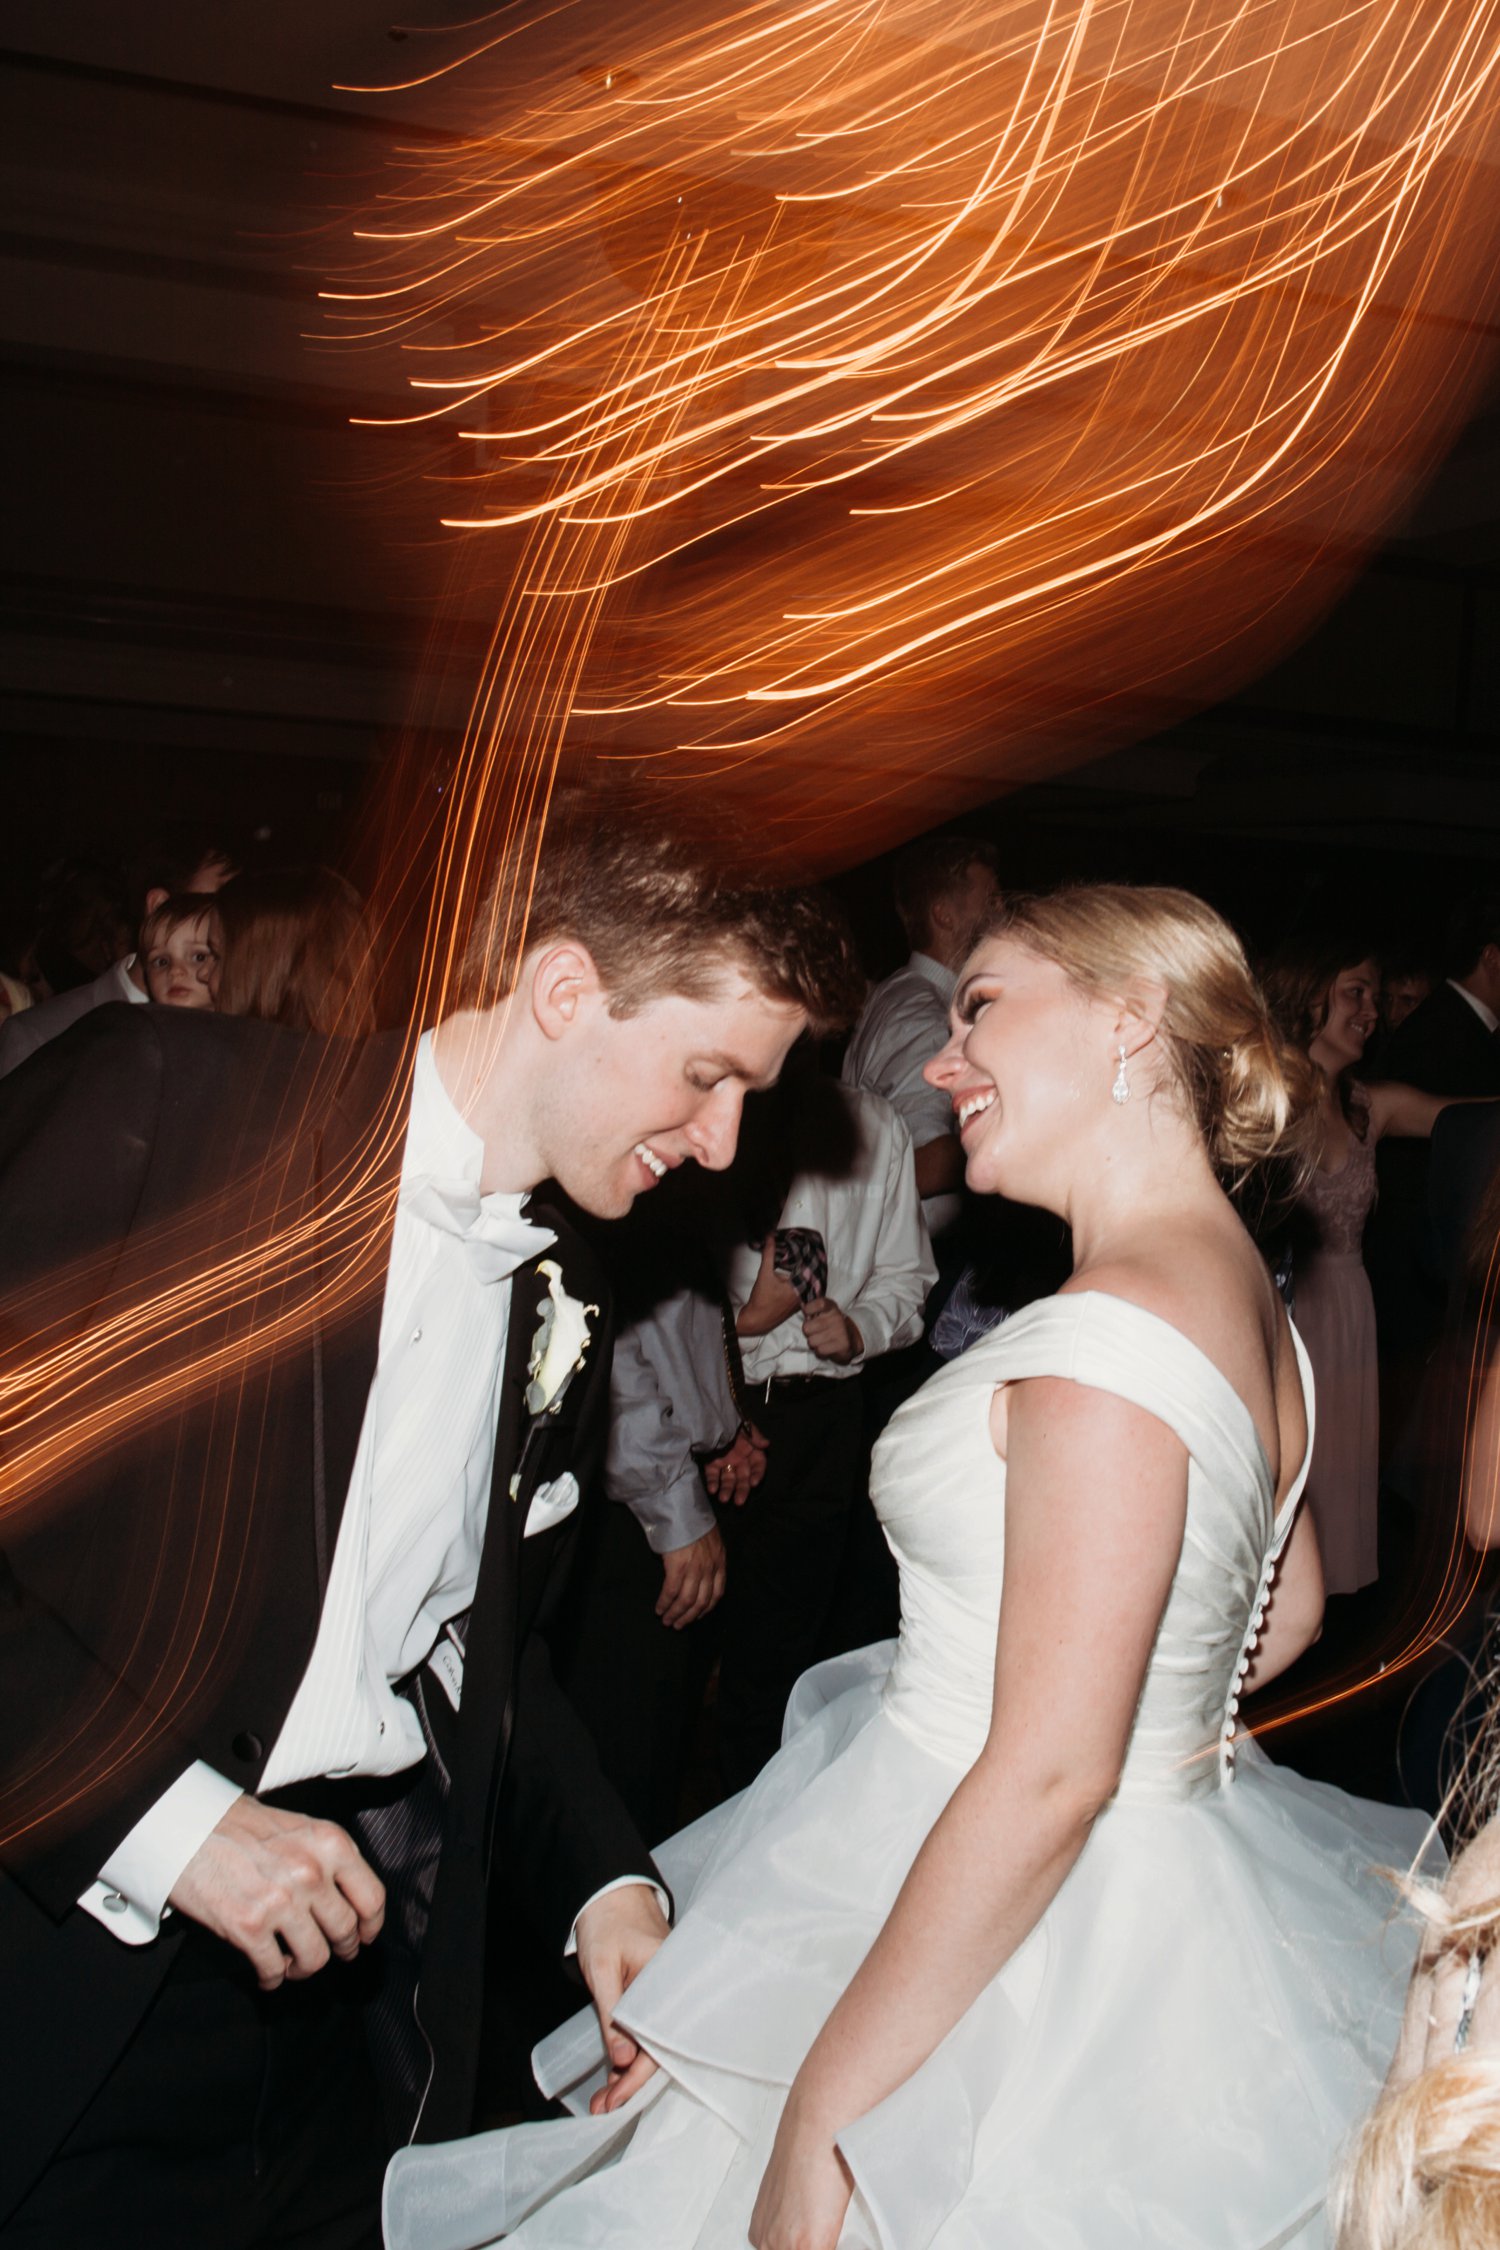  images by feliciathephotographer.com | destination wedding photographer | kansas city | summertime | classic | dance floor | party | dj lights | laughter | singing | bride and groom | glamorous | romantic | true love | 